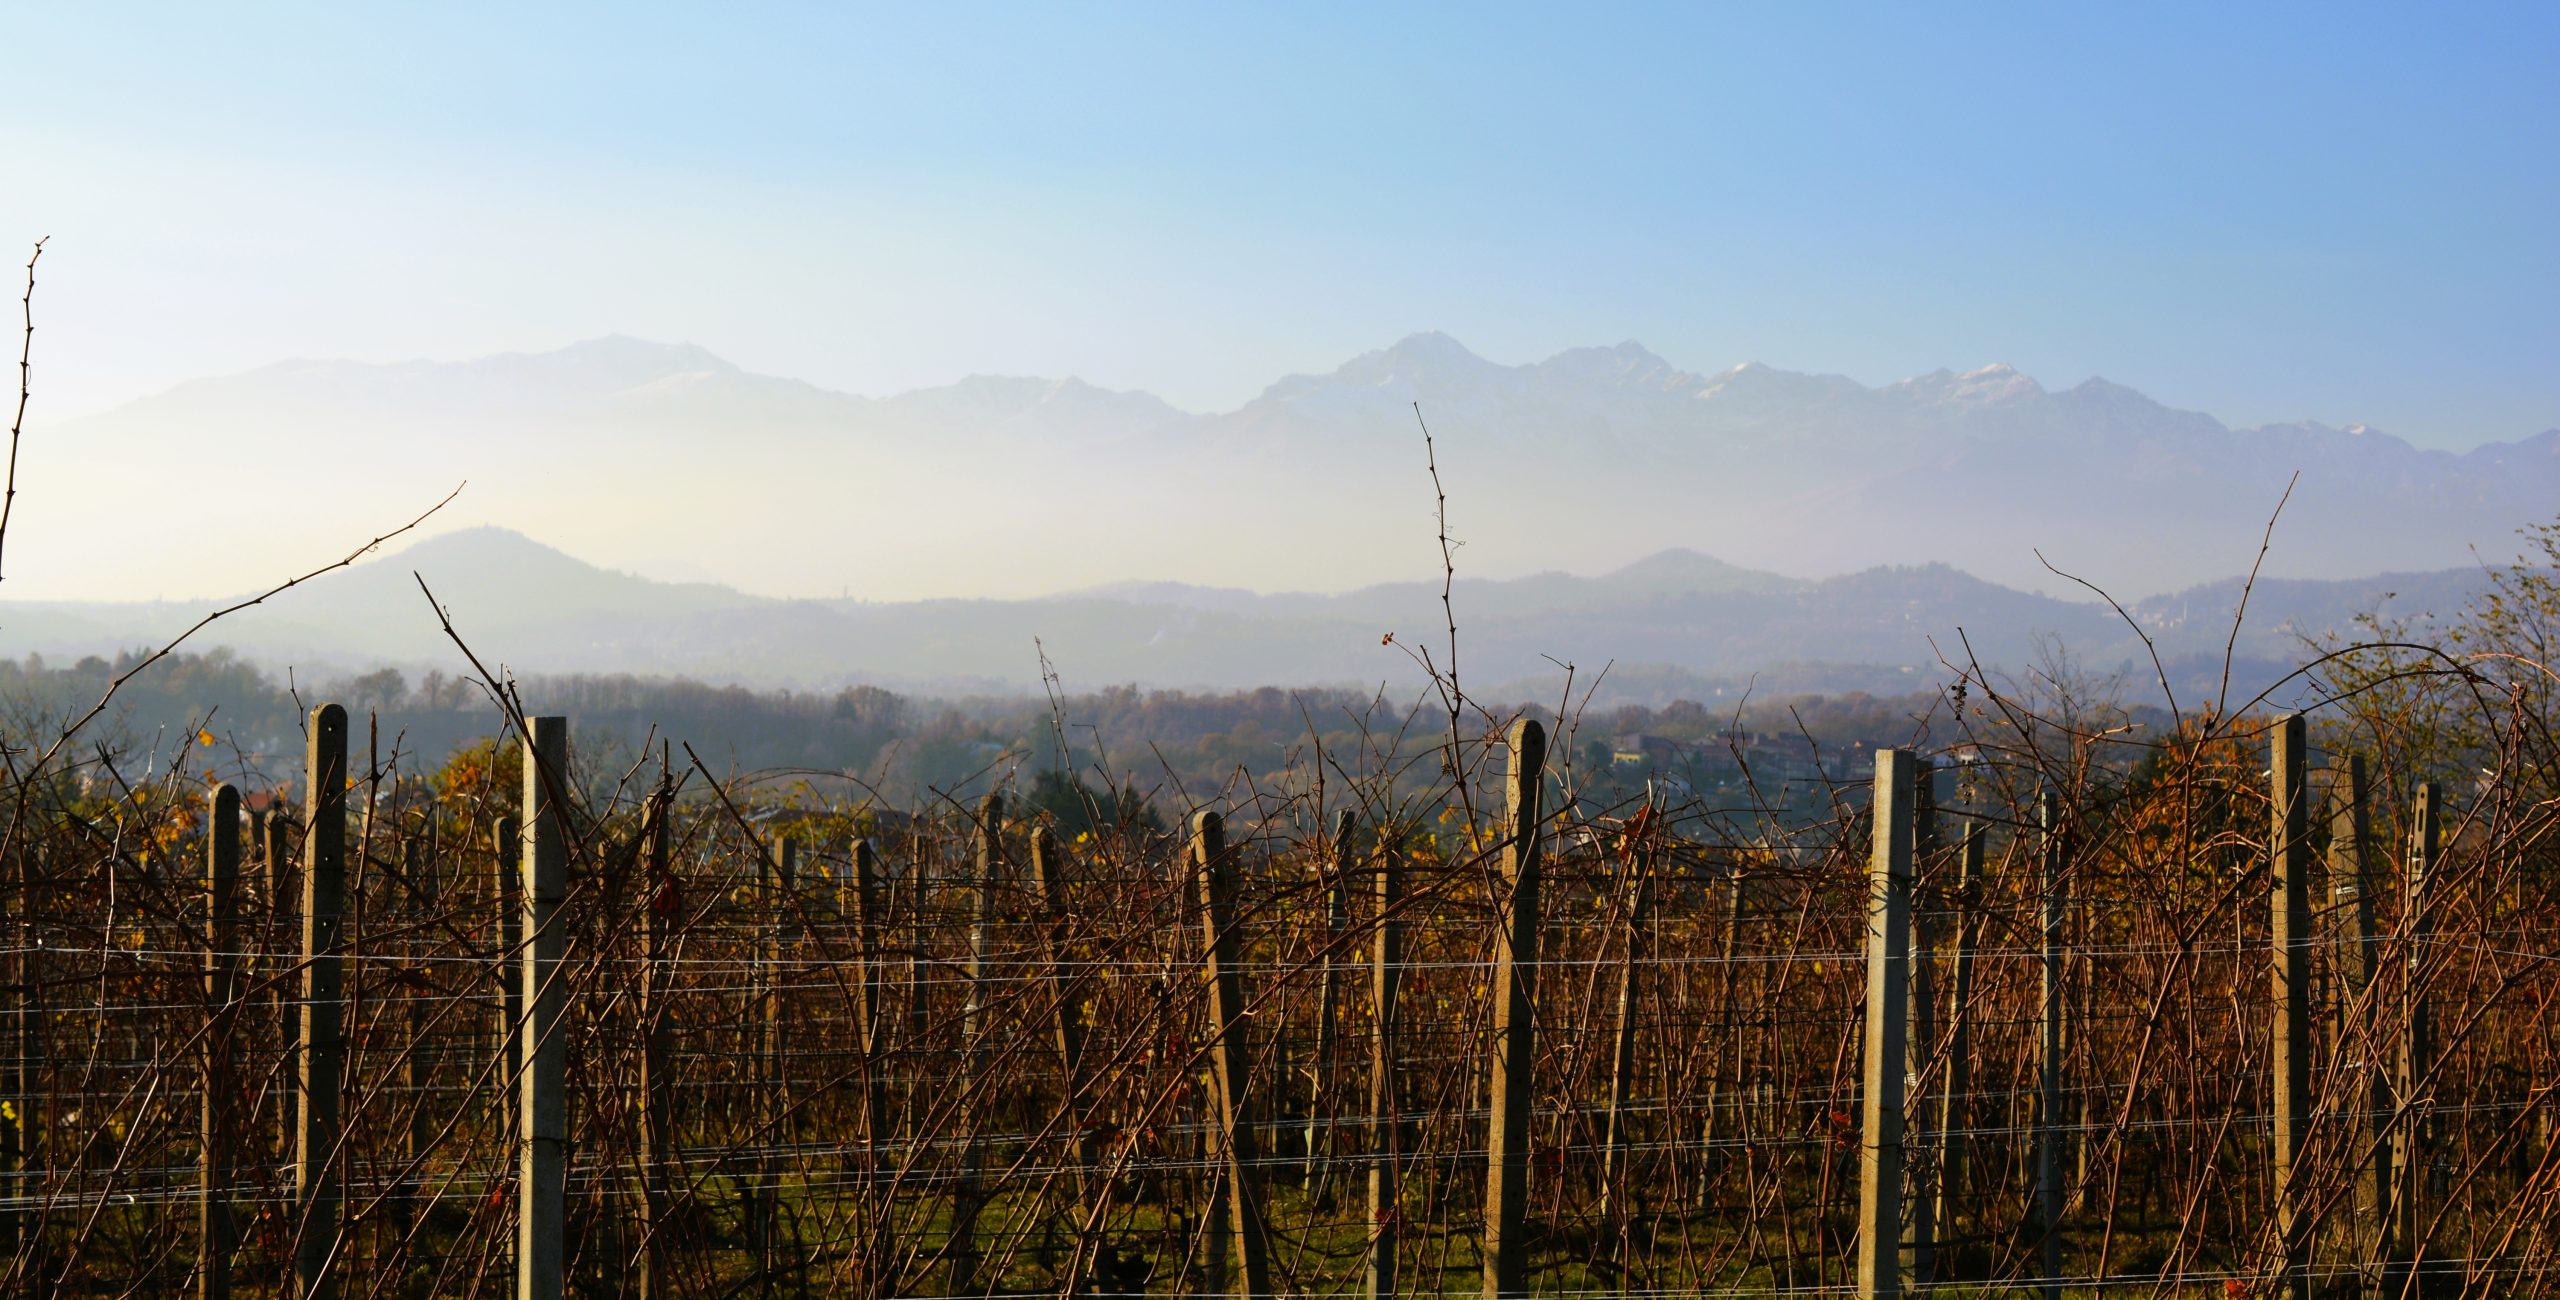 Piedmont vineyard